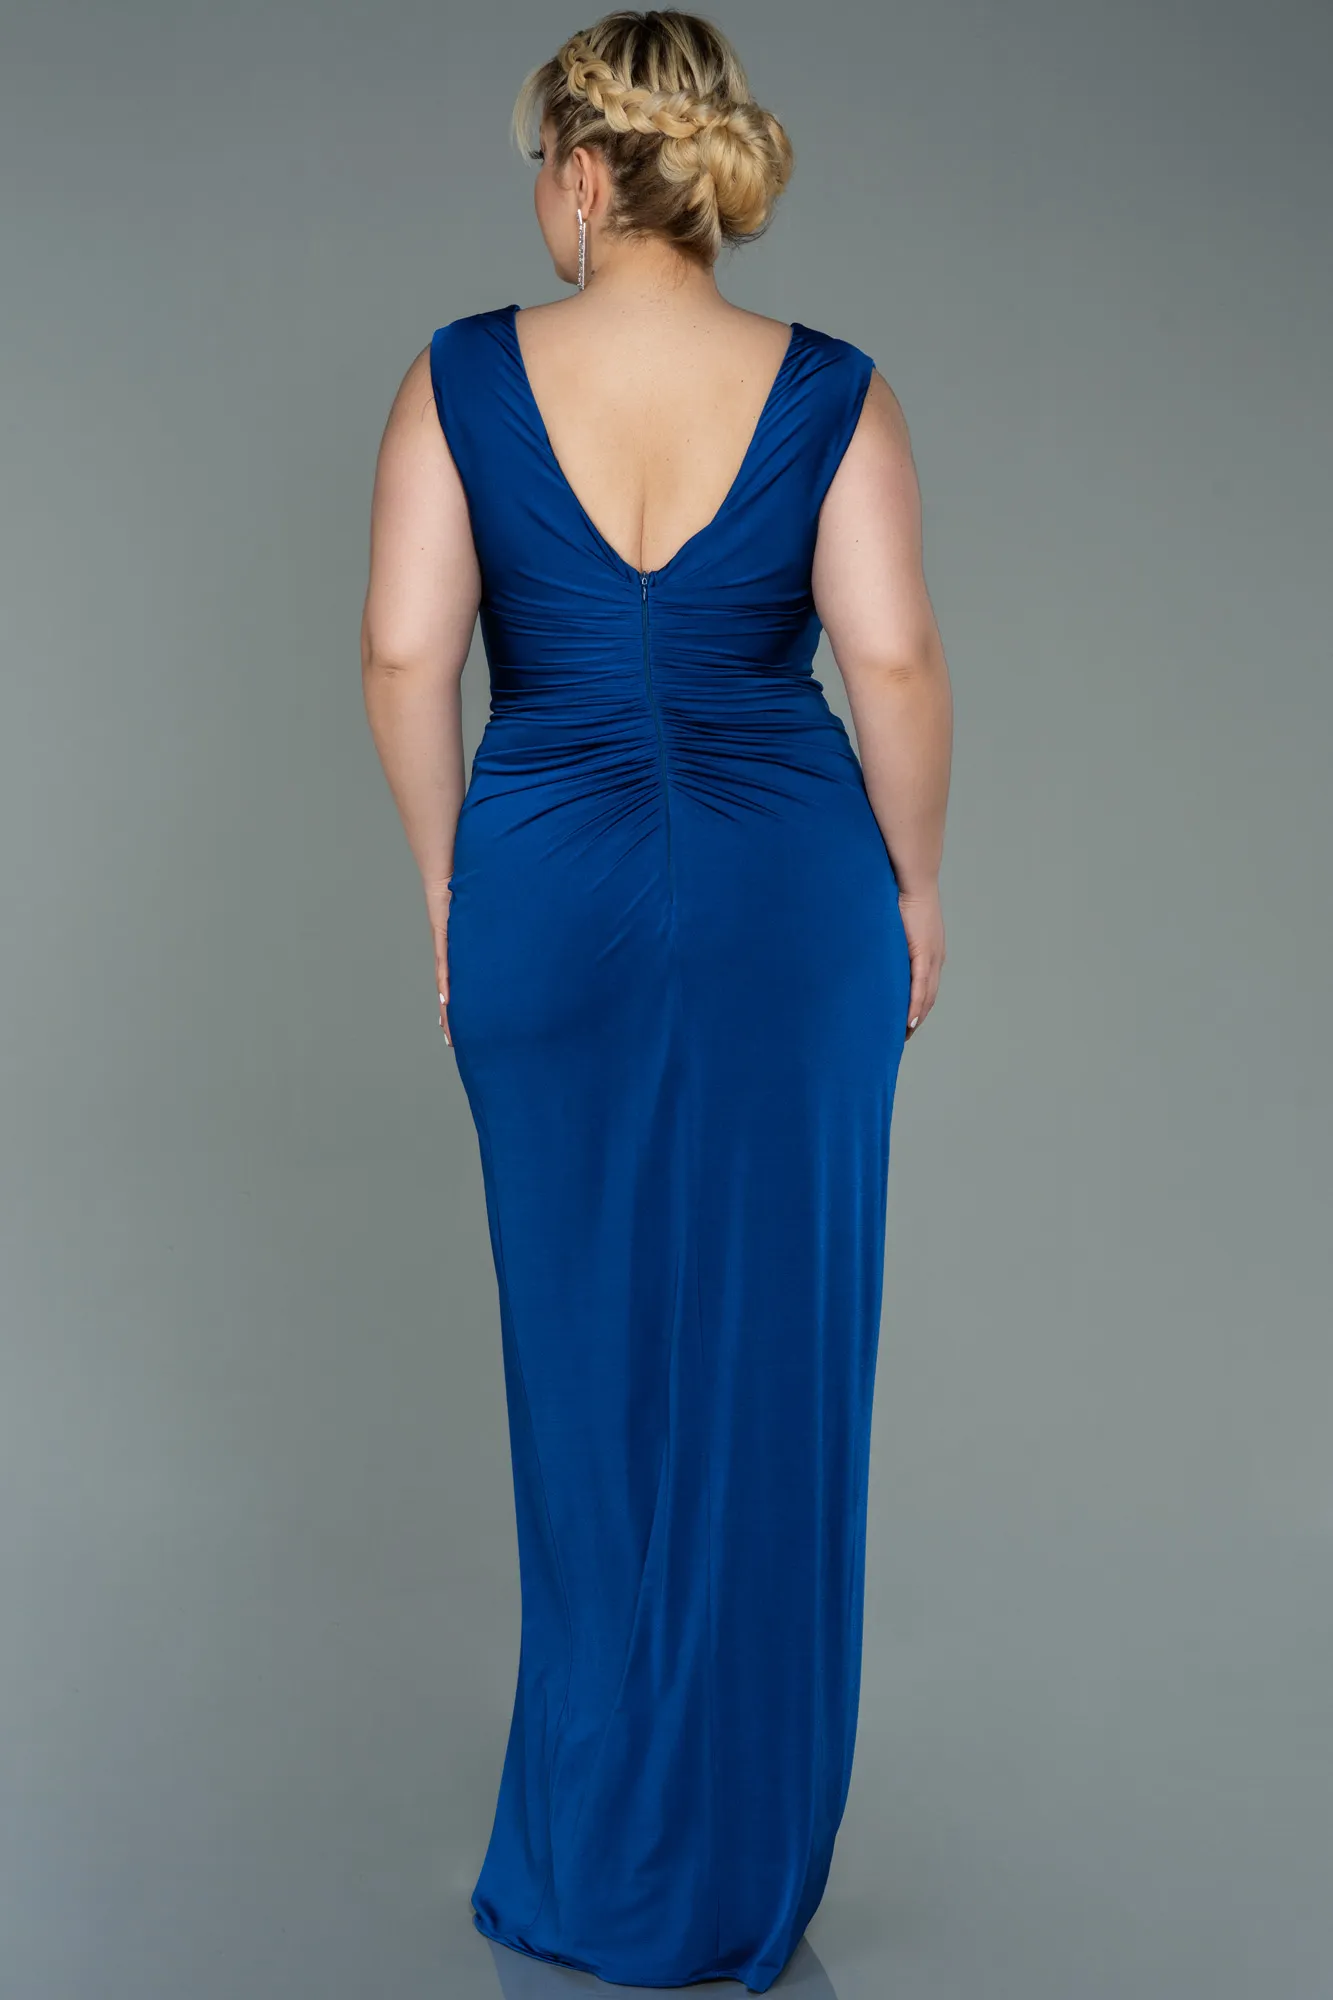 Sax Blue-Long Plus Size Evening Dress ABU2974